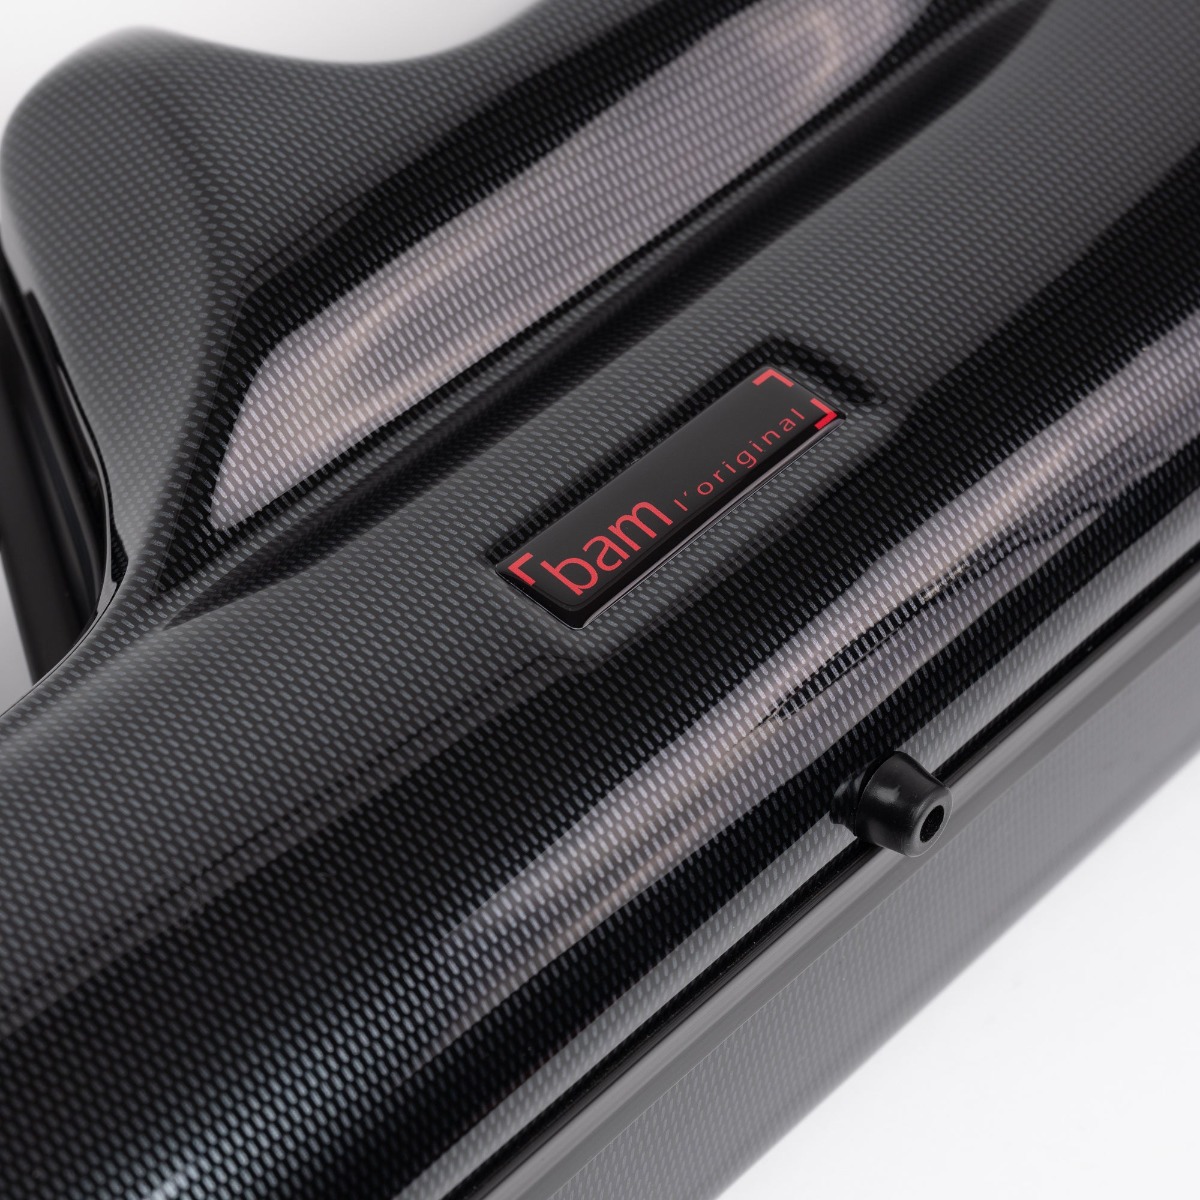 Bam 4011SC Cabine - Koffer für Altsaxophon - Black Carbon